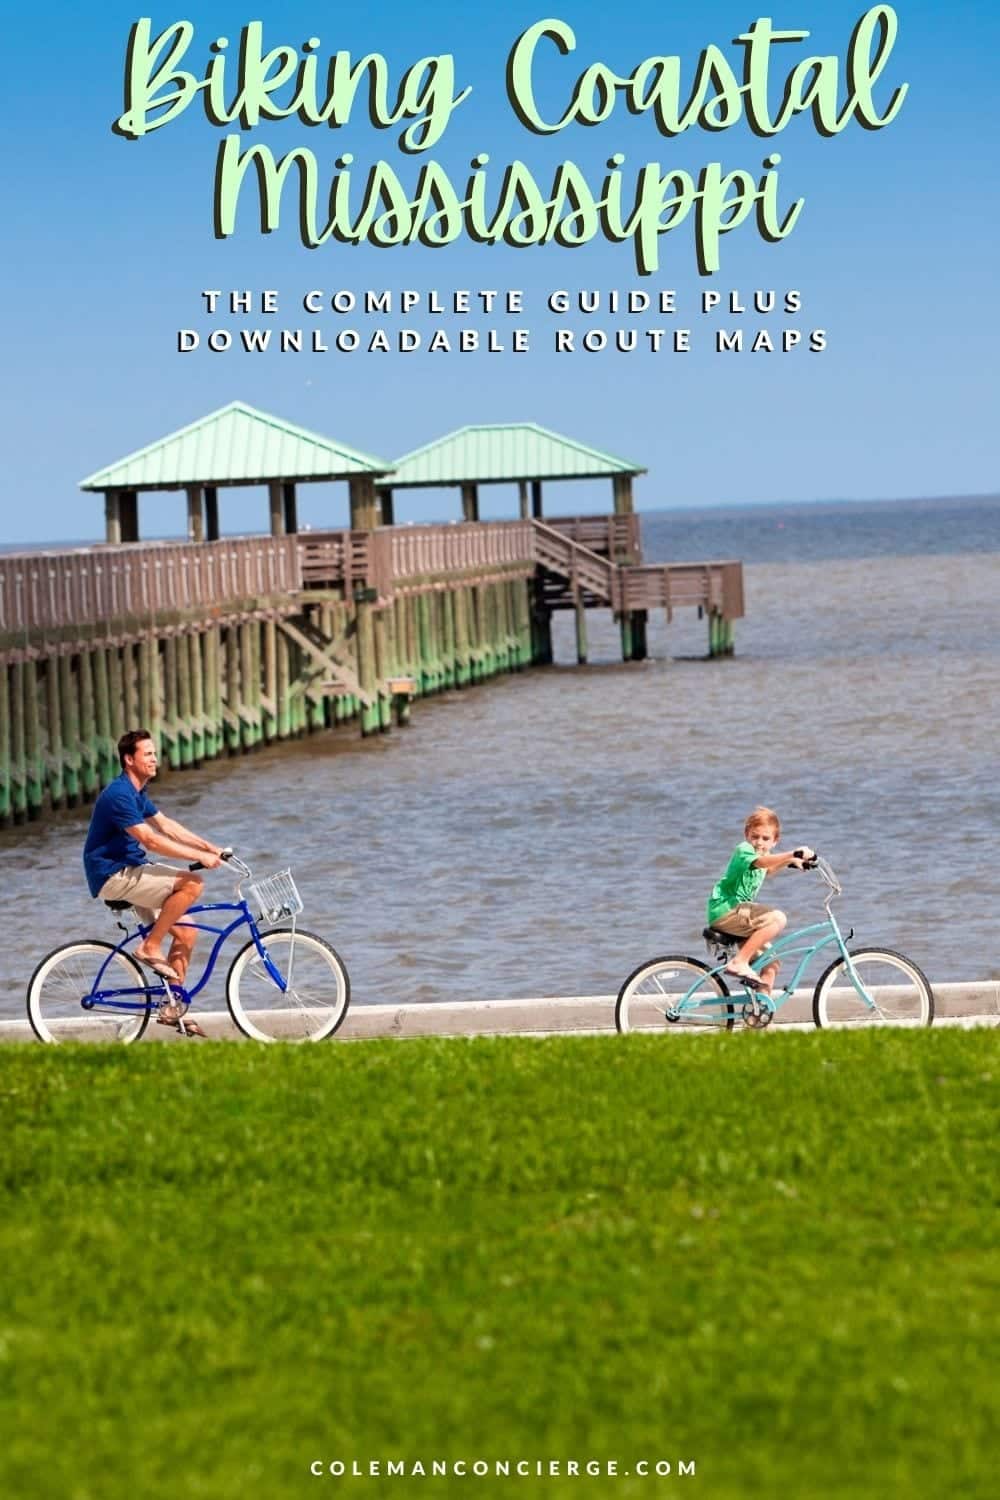 Family biking on beach Coastal Mississippi